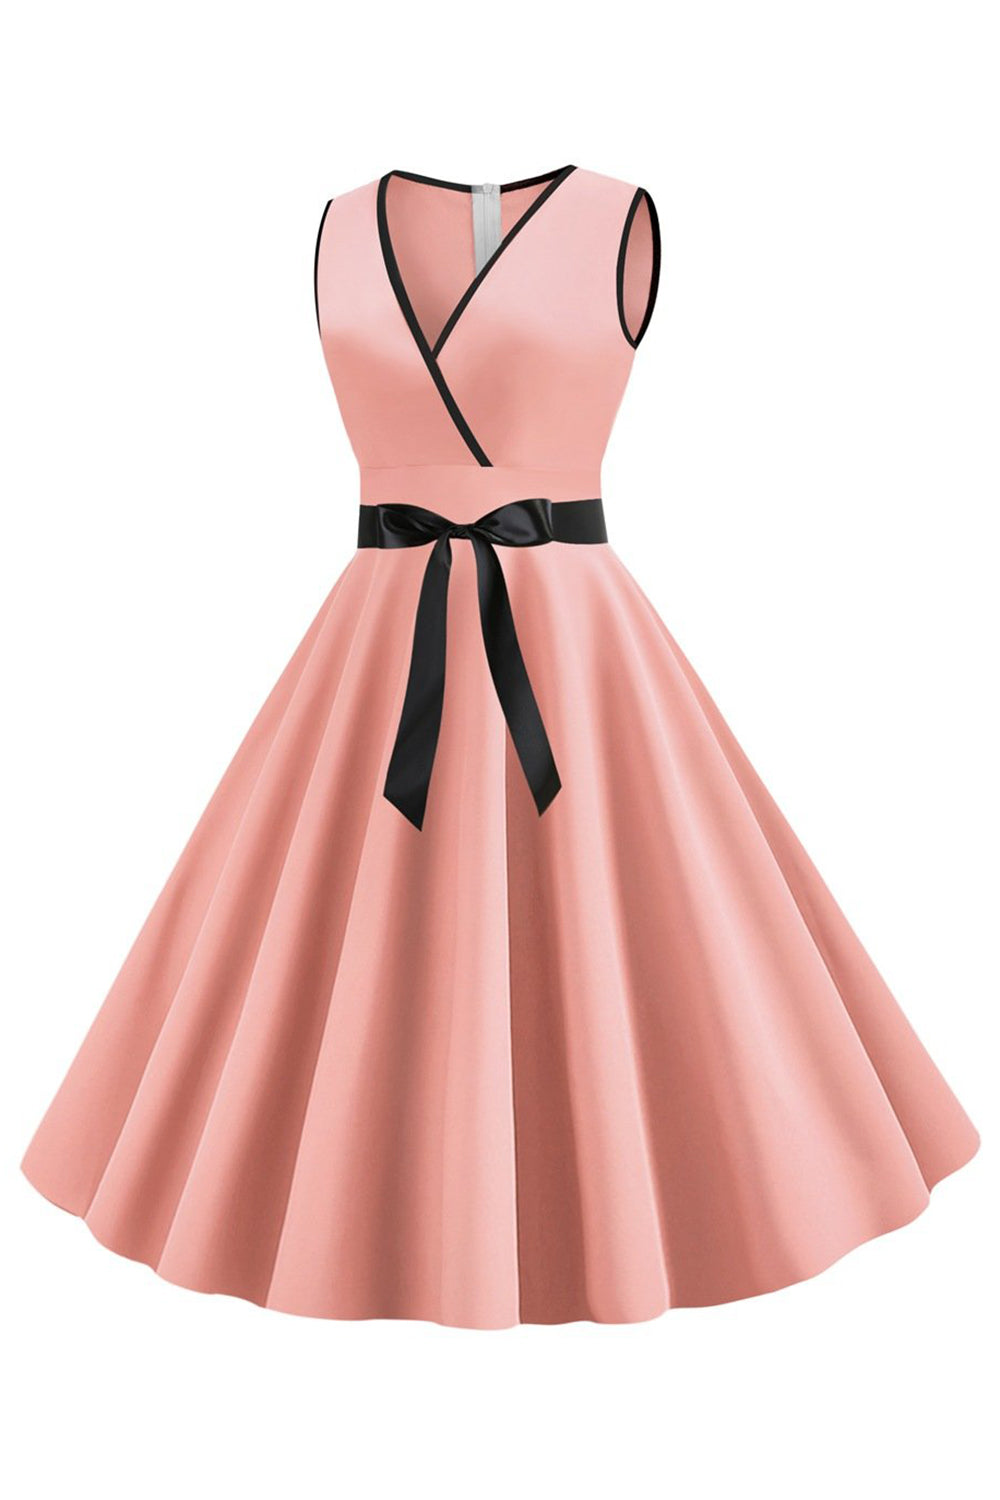 Blush Sleeveless V-Neck 1950s Dress With Bowknot